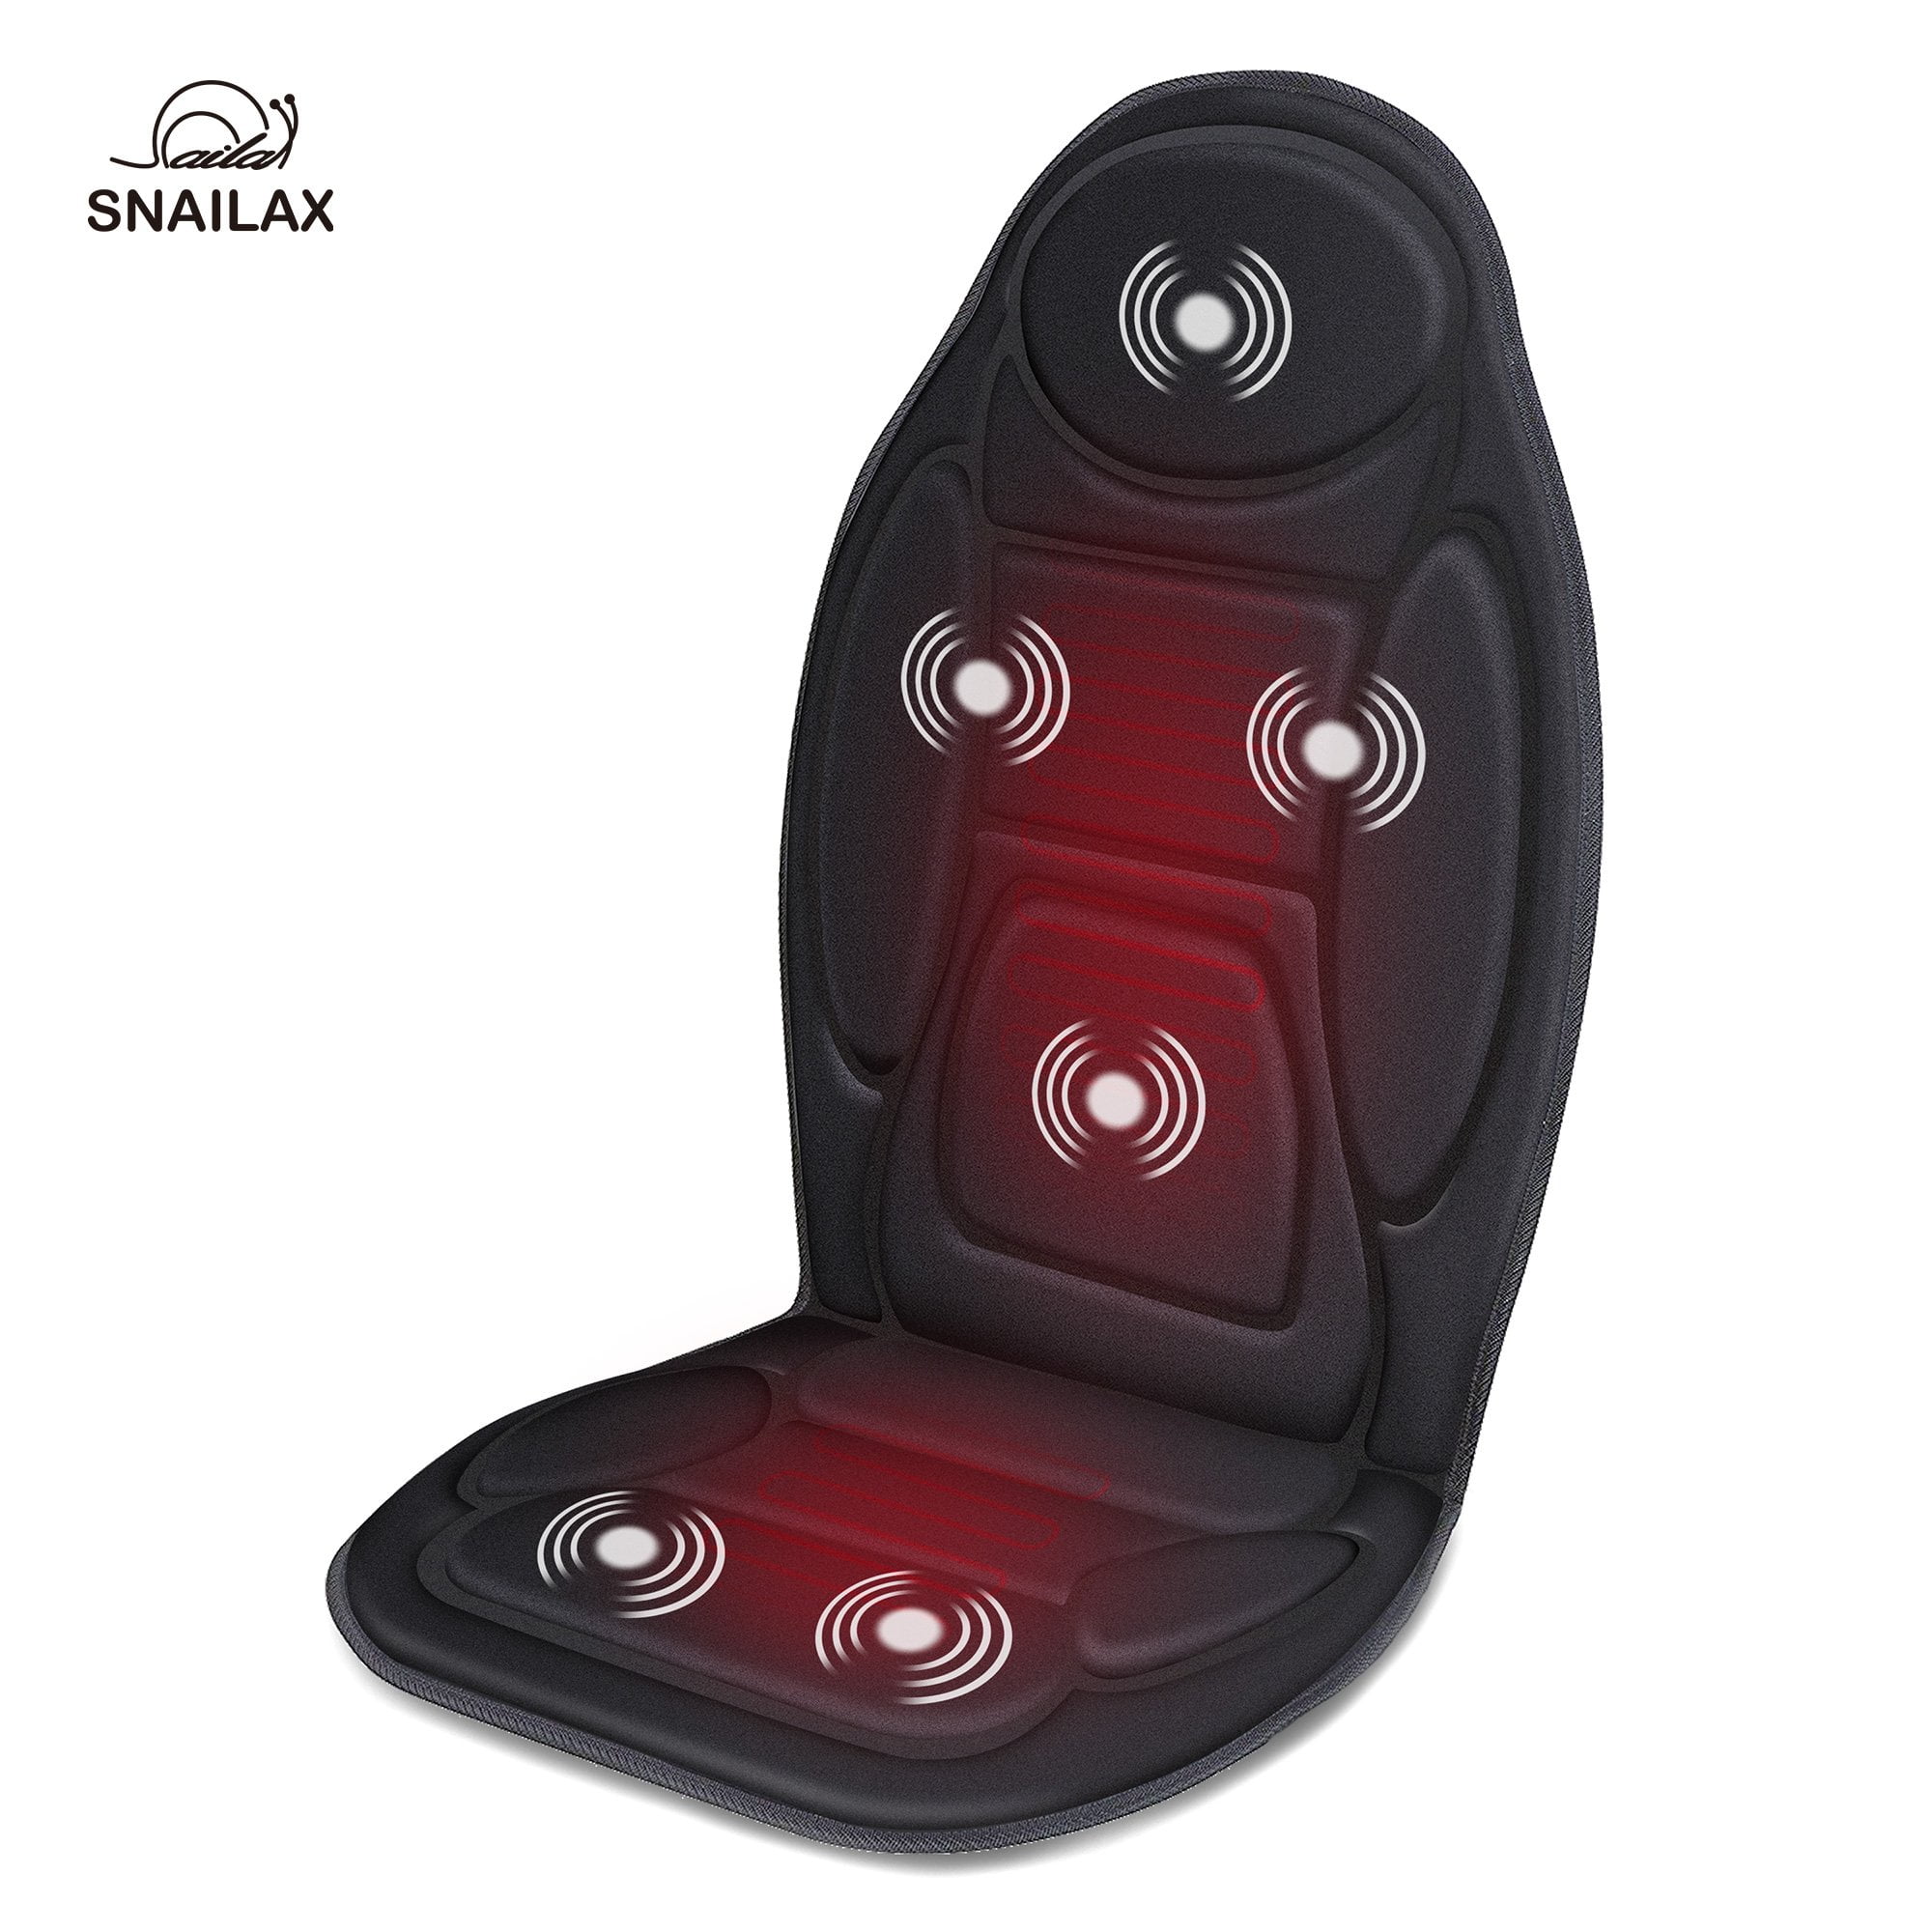 Snailax Vibration Chair Massager Pad, 6 Massage Seat Cushion with Heat Levels, Gifts - Walmart.com